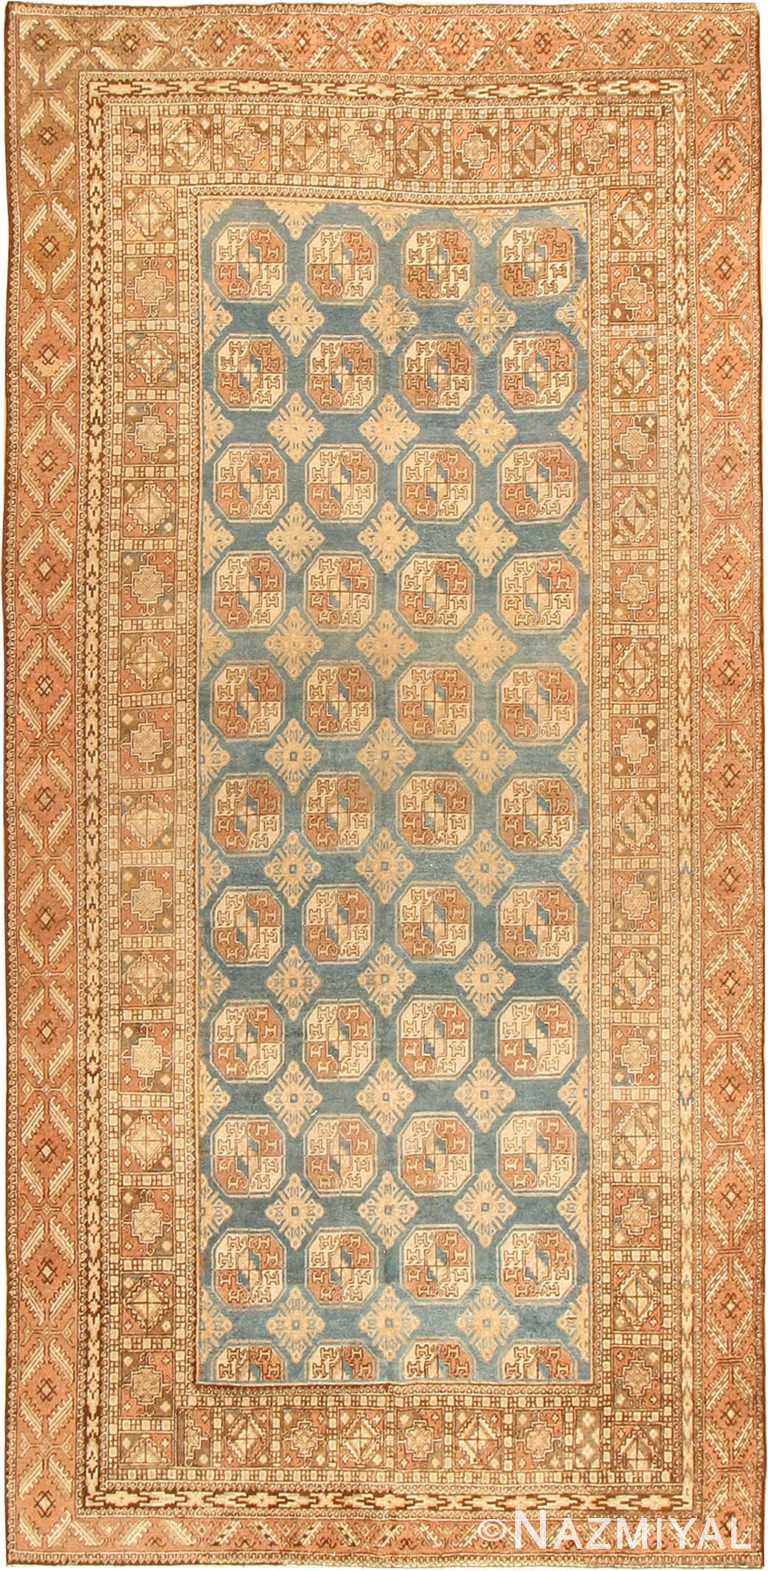 Antique Khotan Oriental Rugs 42528 Detail/Large View